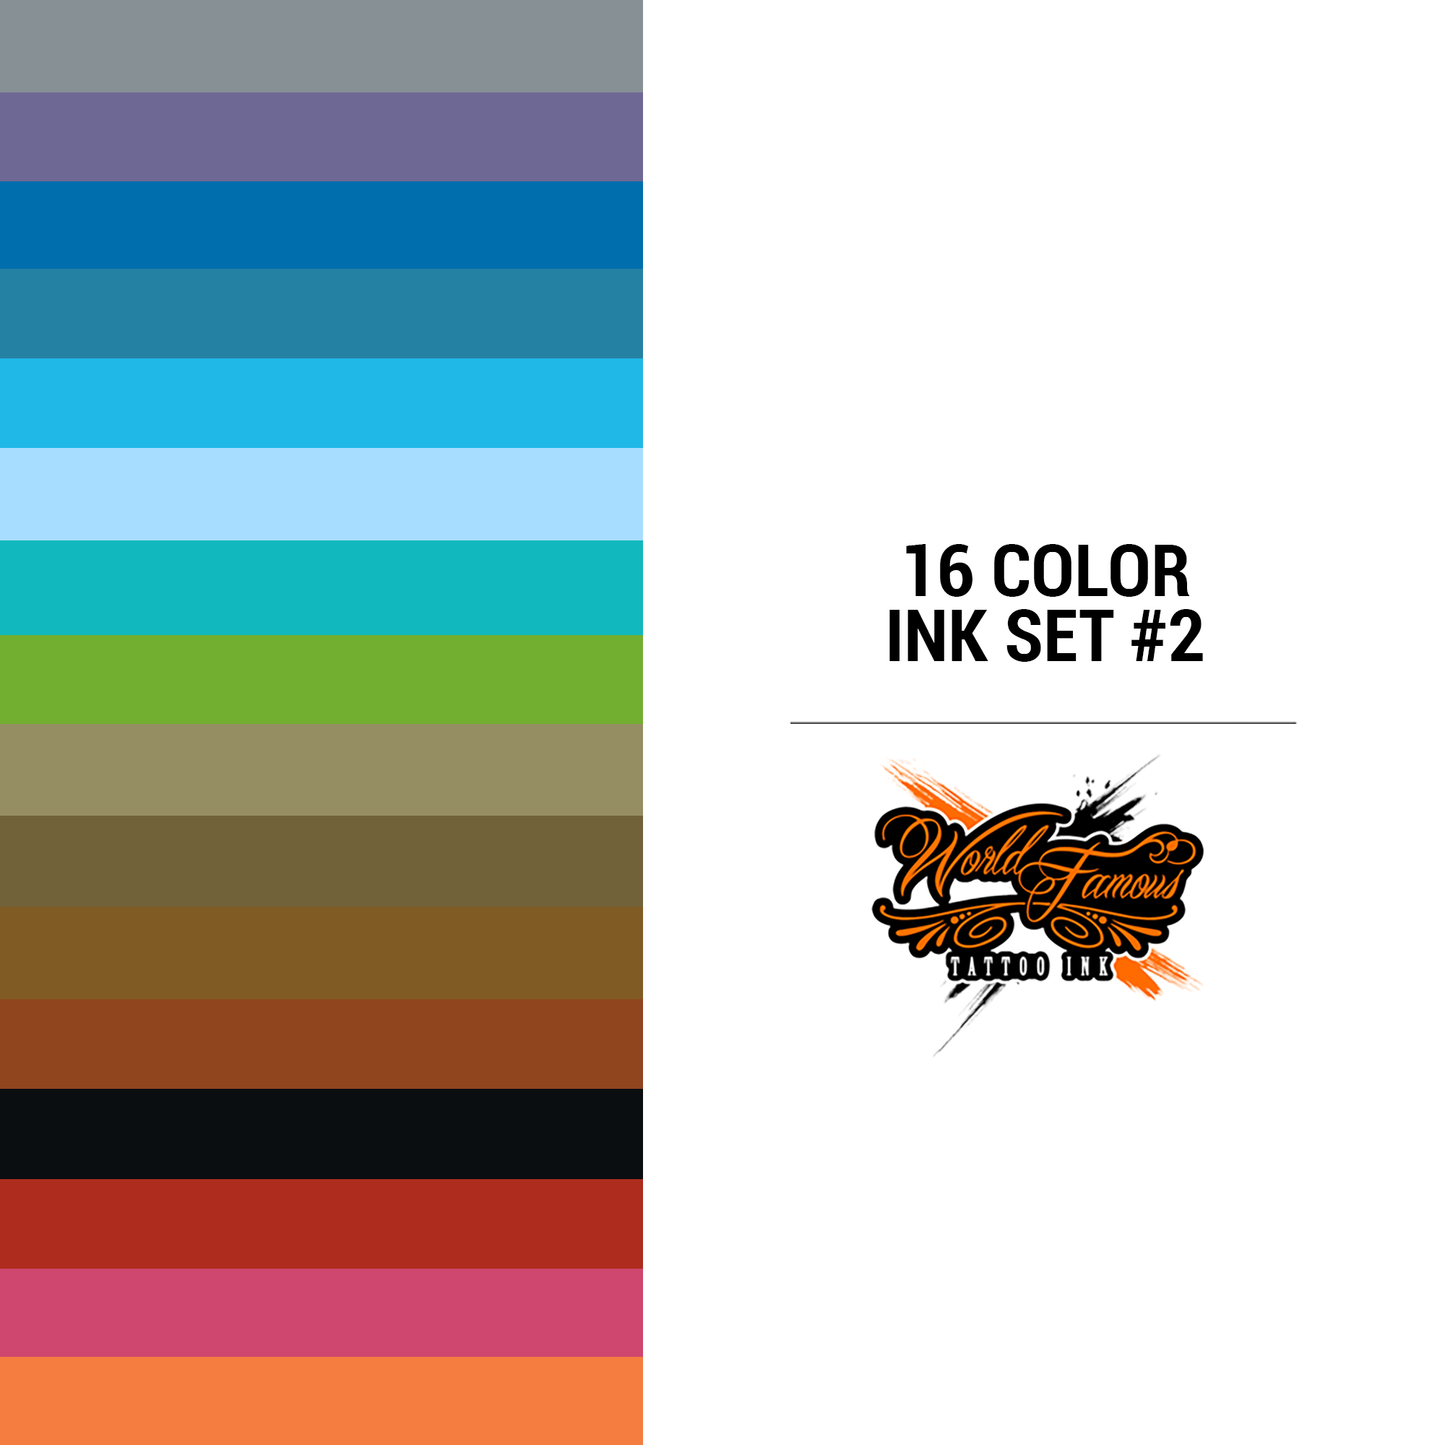 16 Color Ink Set #2 | World Famous Tattoo Ink